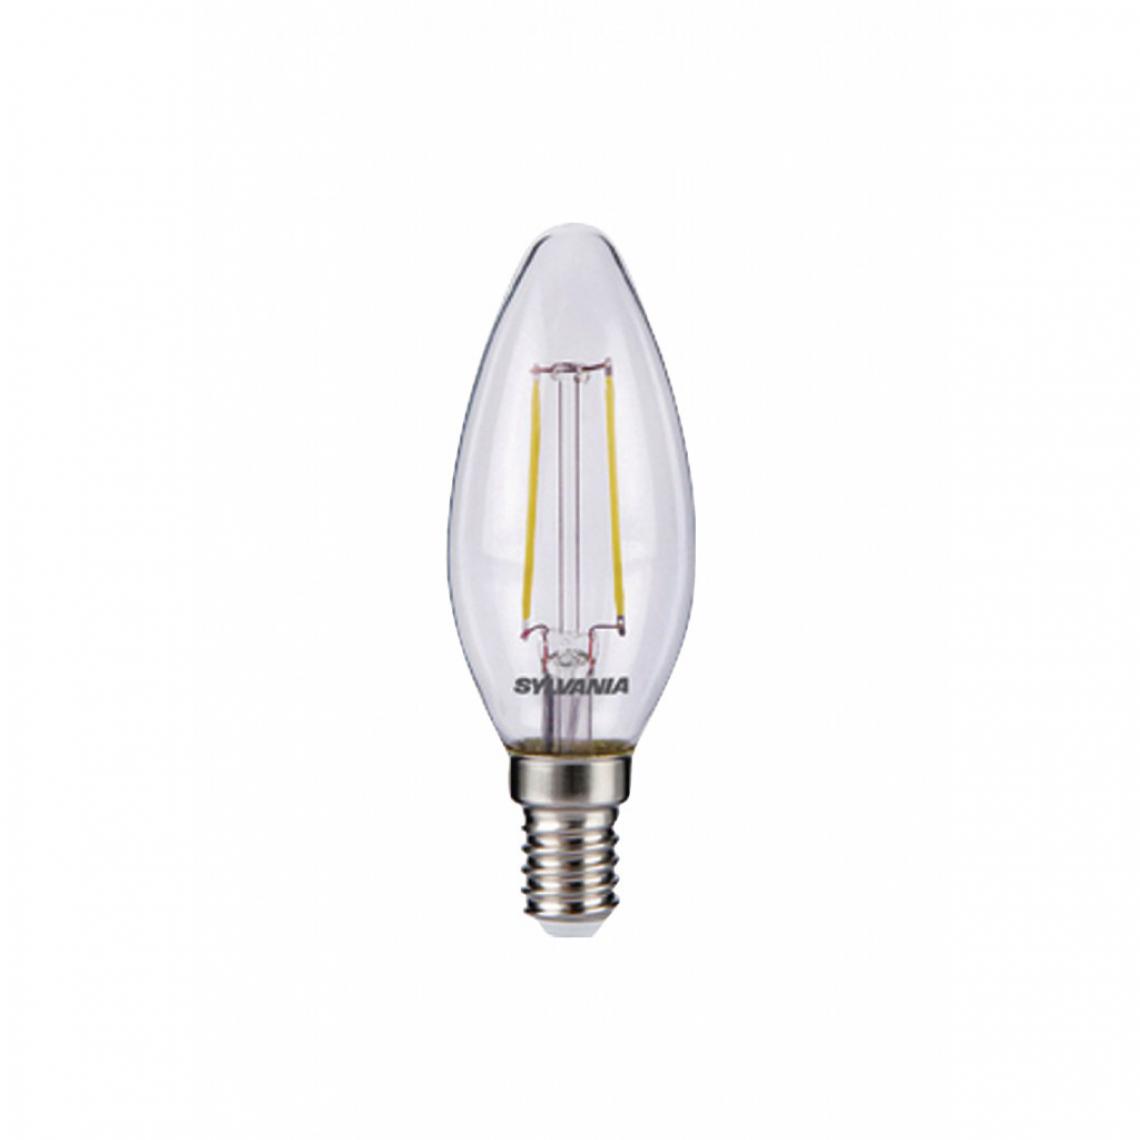 Alpexe - Lampe LED Vintage Bougie 2.5 W 250 lm 2700 K - Ampoules LED